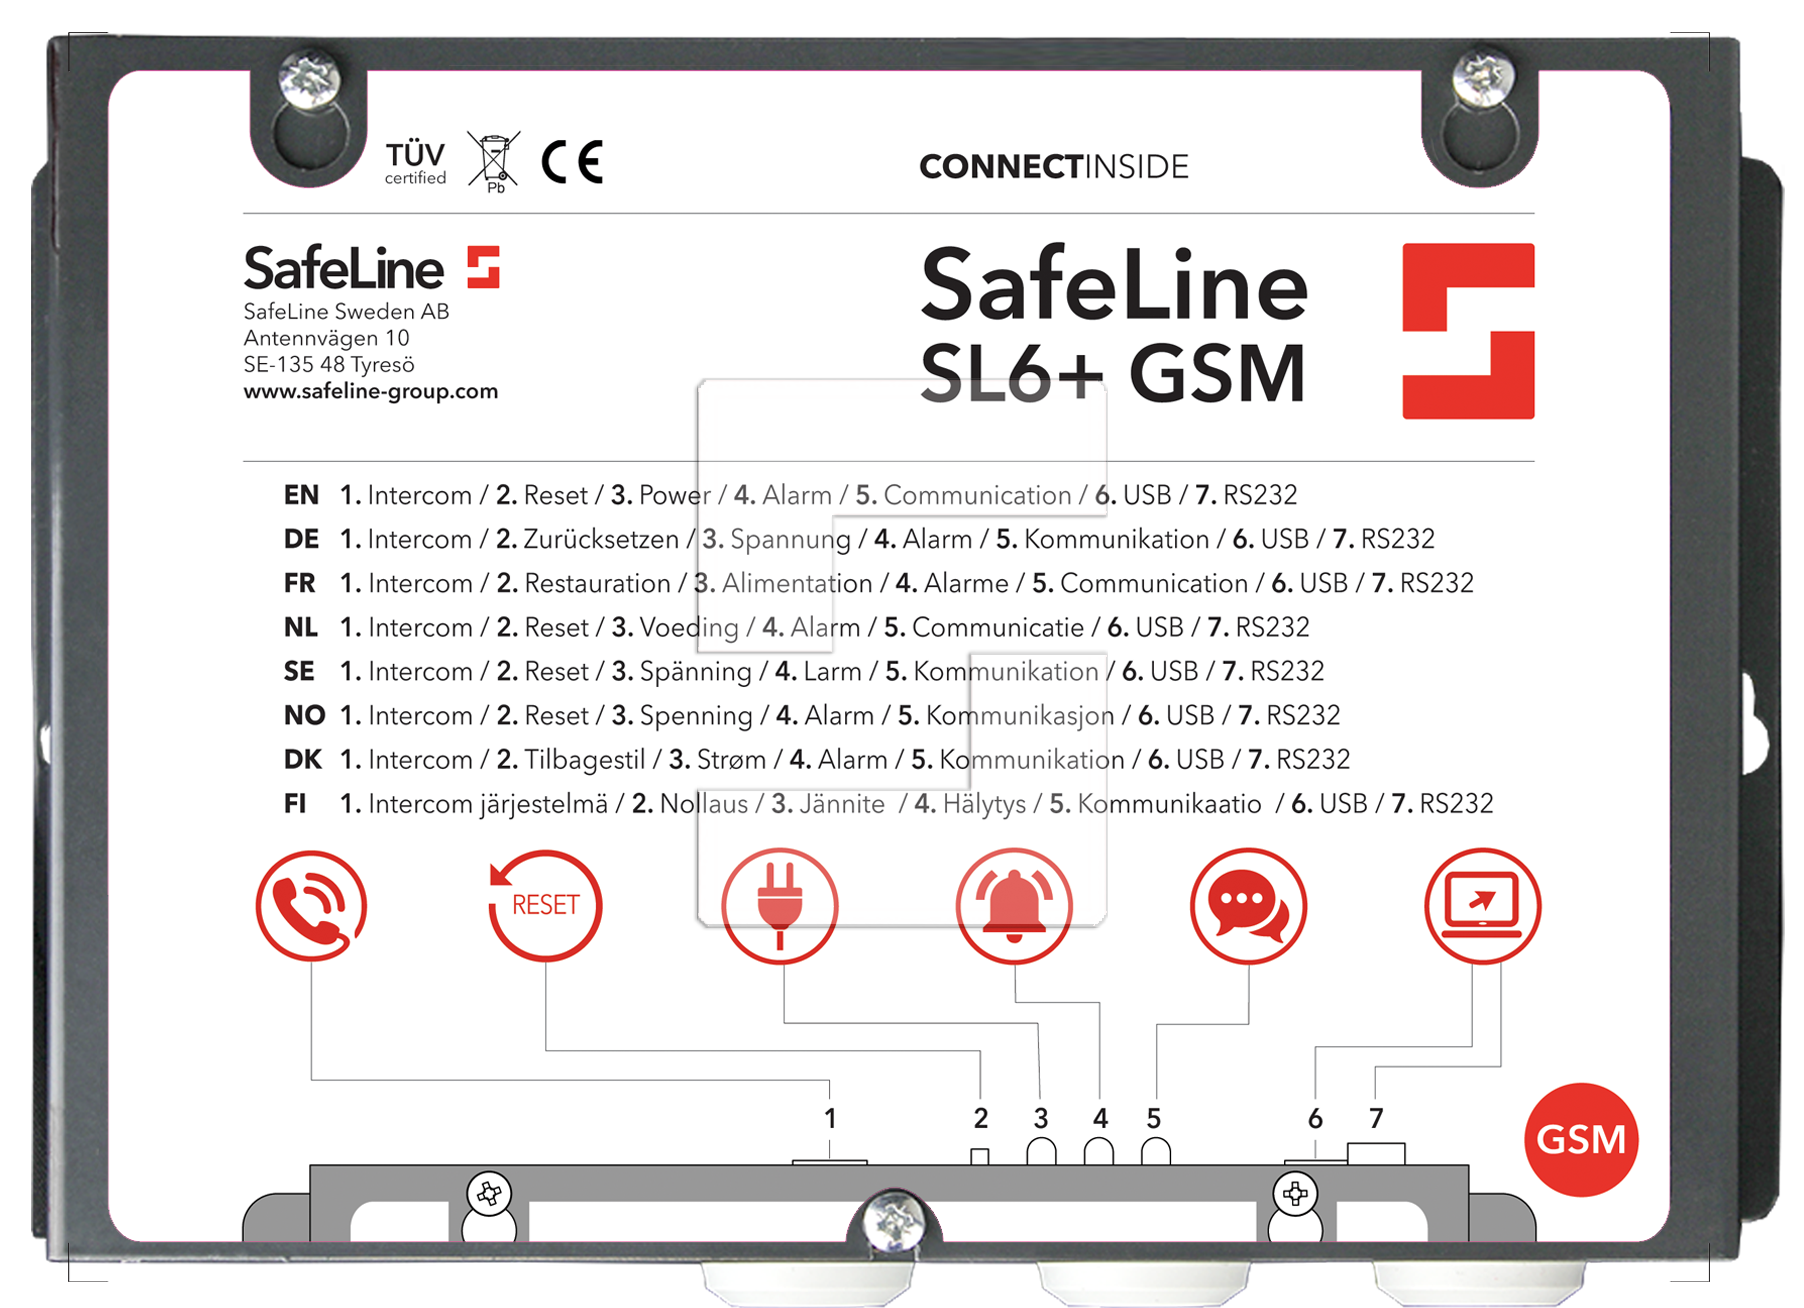 SafeLine SL6+ GSM 2G